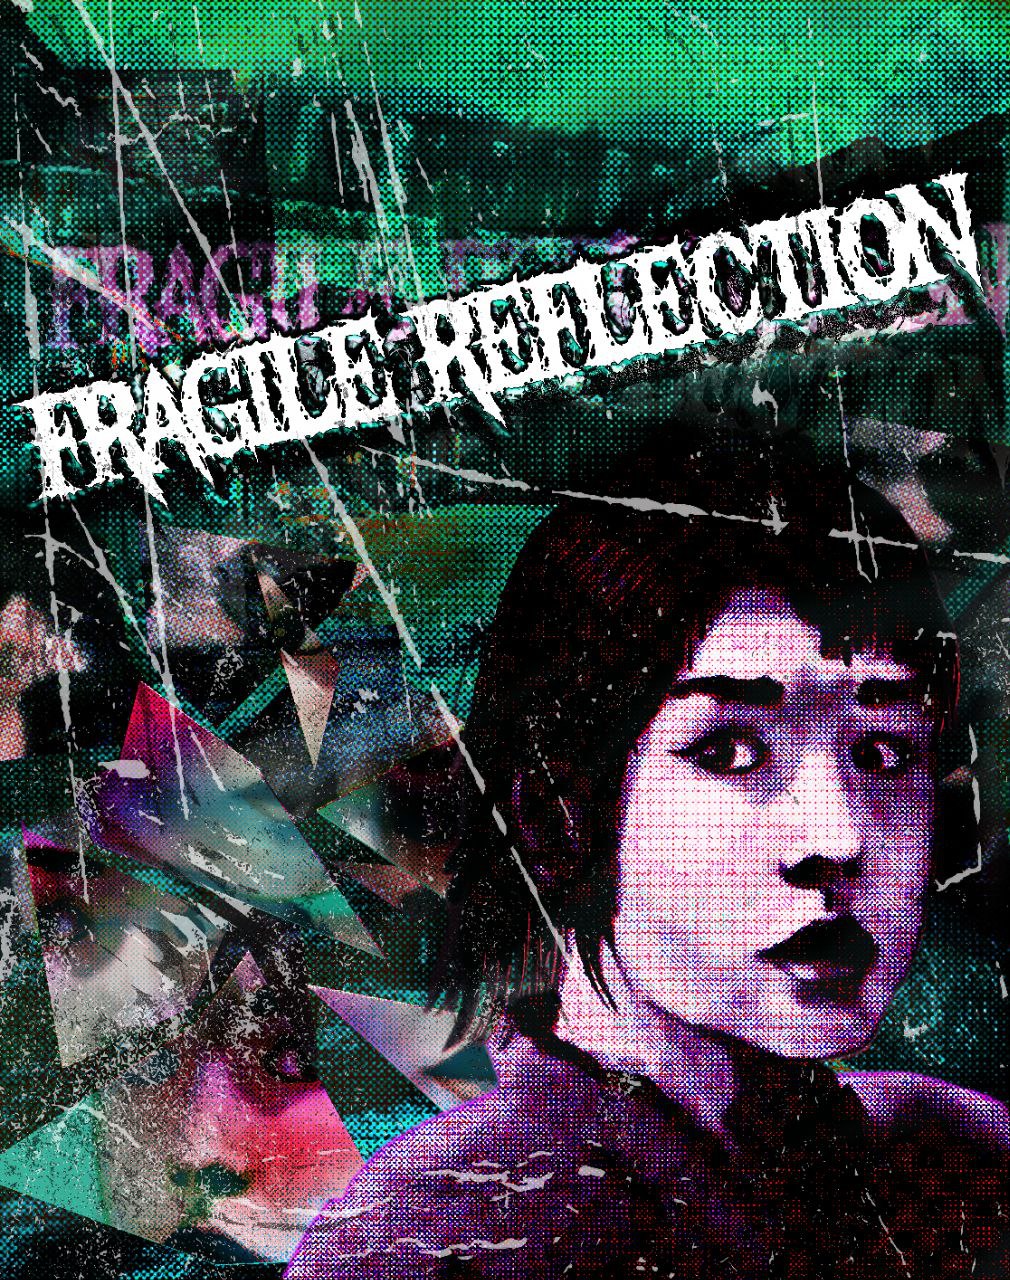 Fragile Reflection